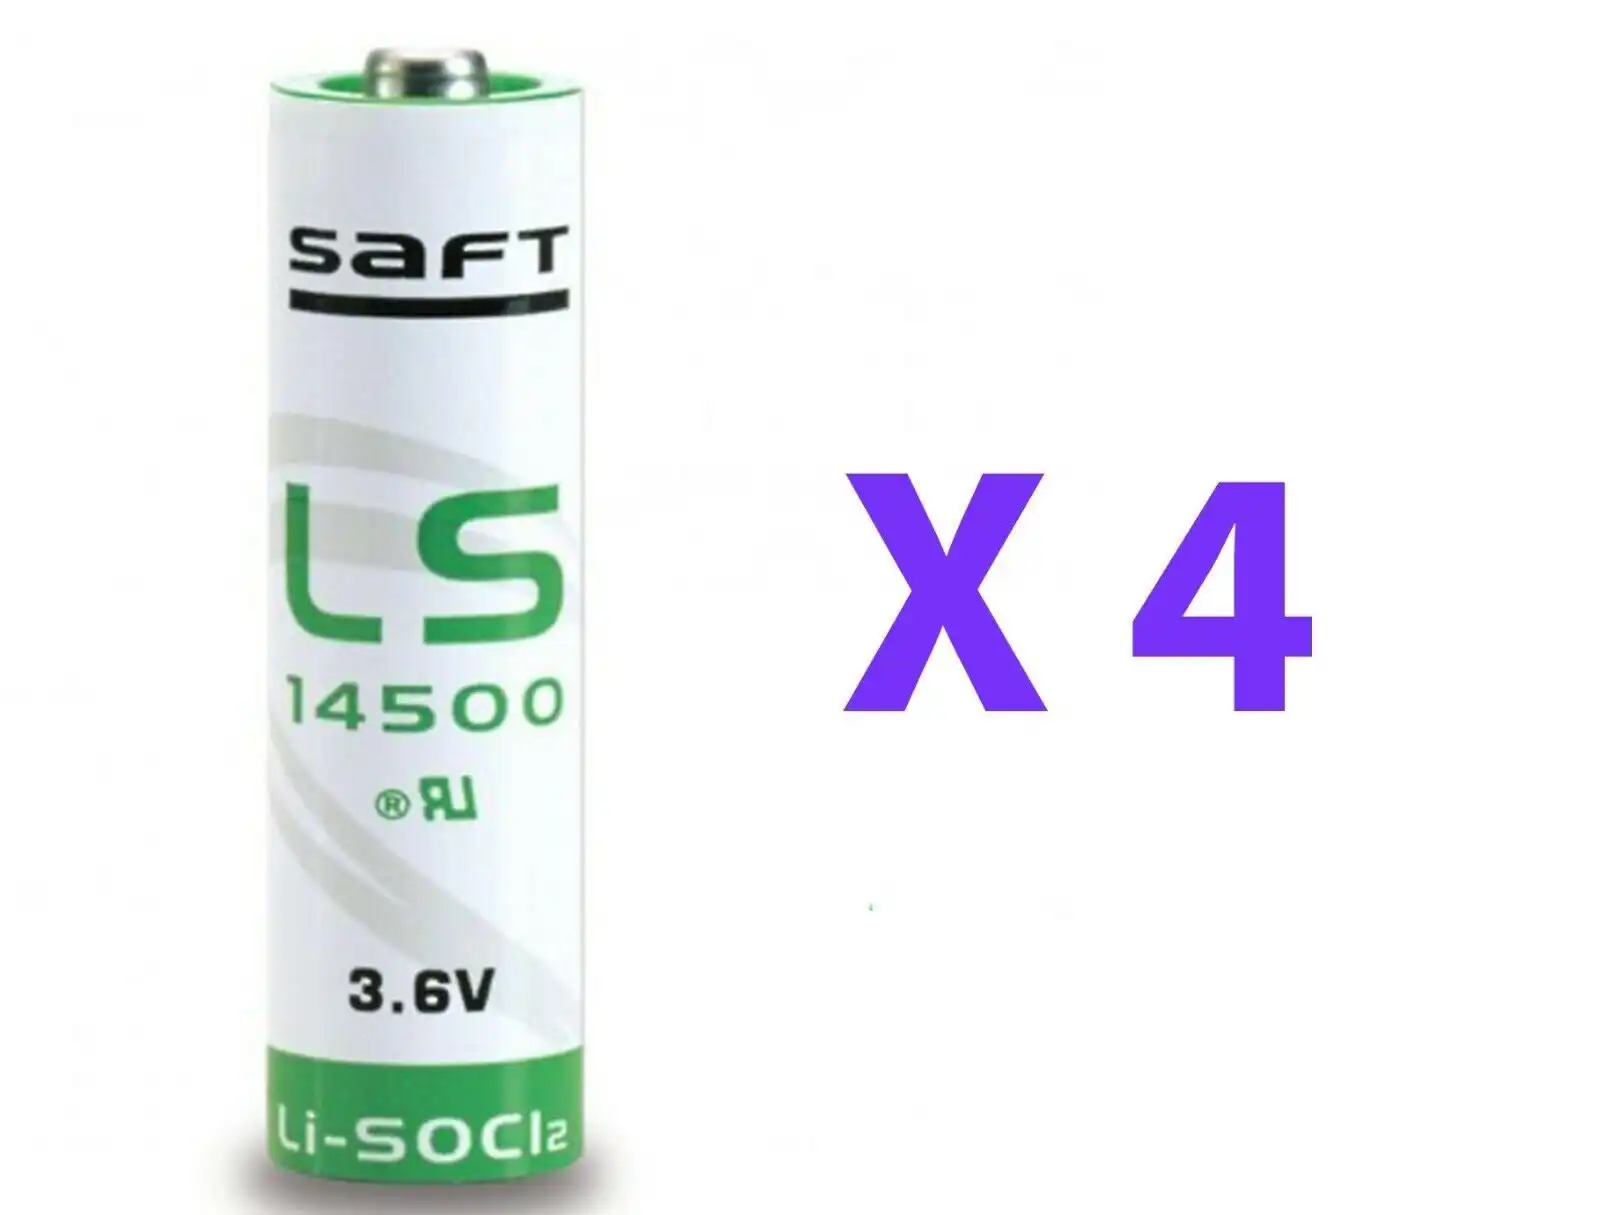 4x Saft LS14500 Lithium Primary Battery 3.6V AA R6 Li-SOCl2